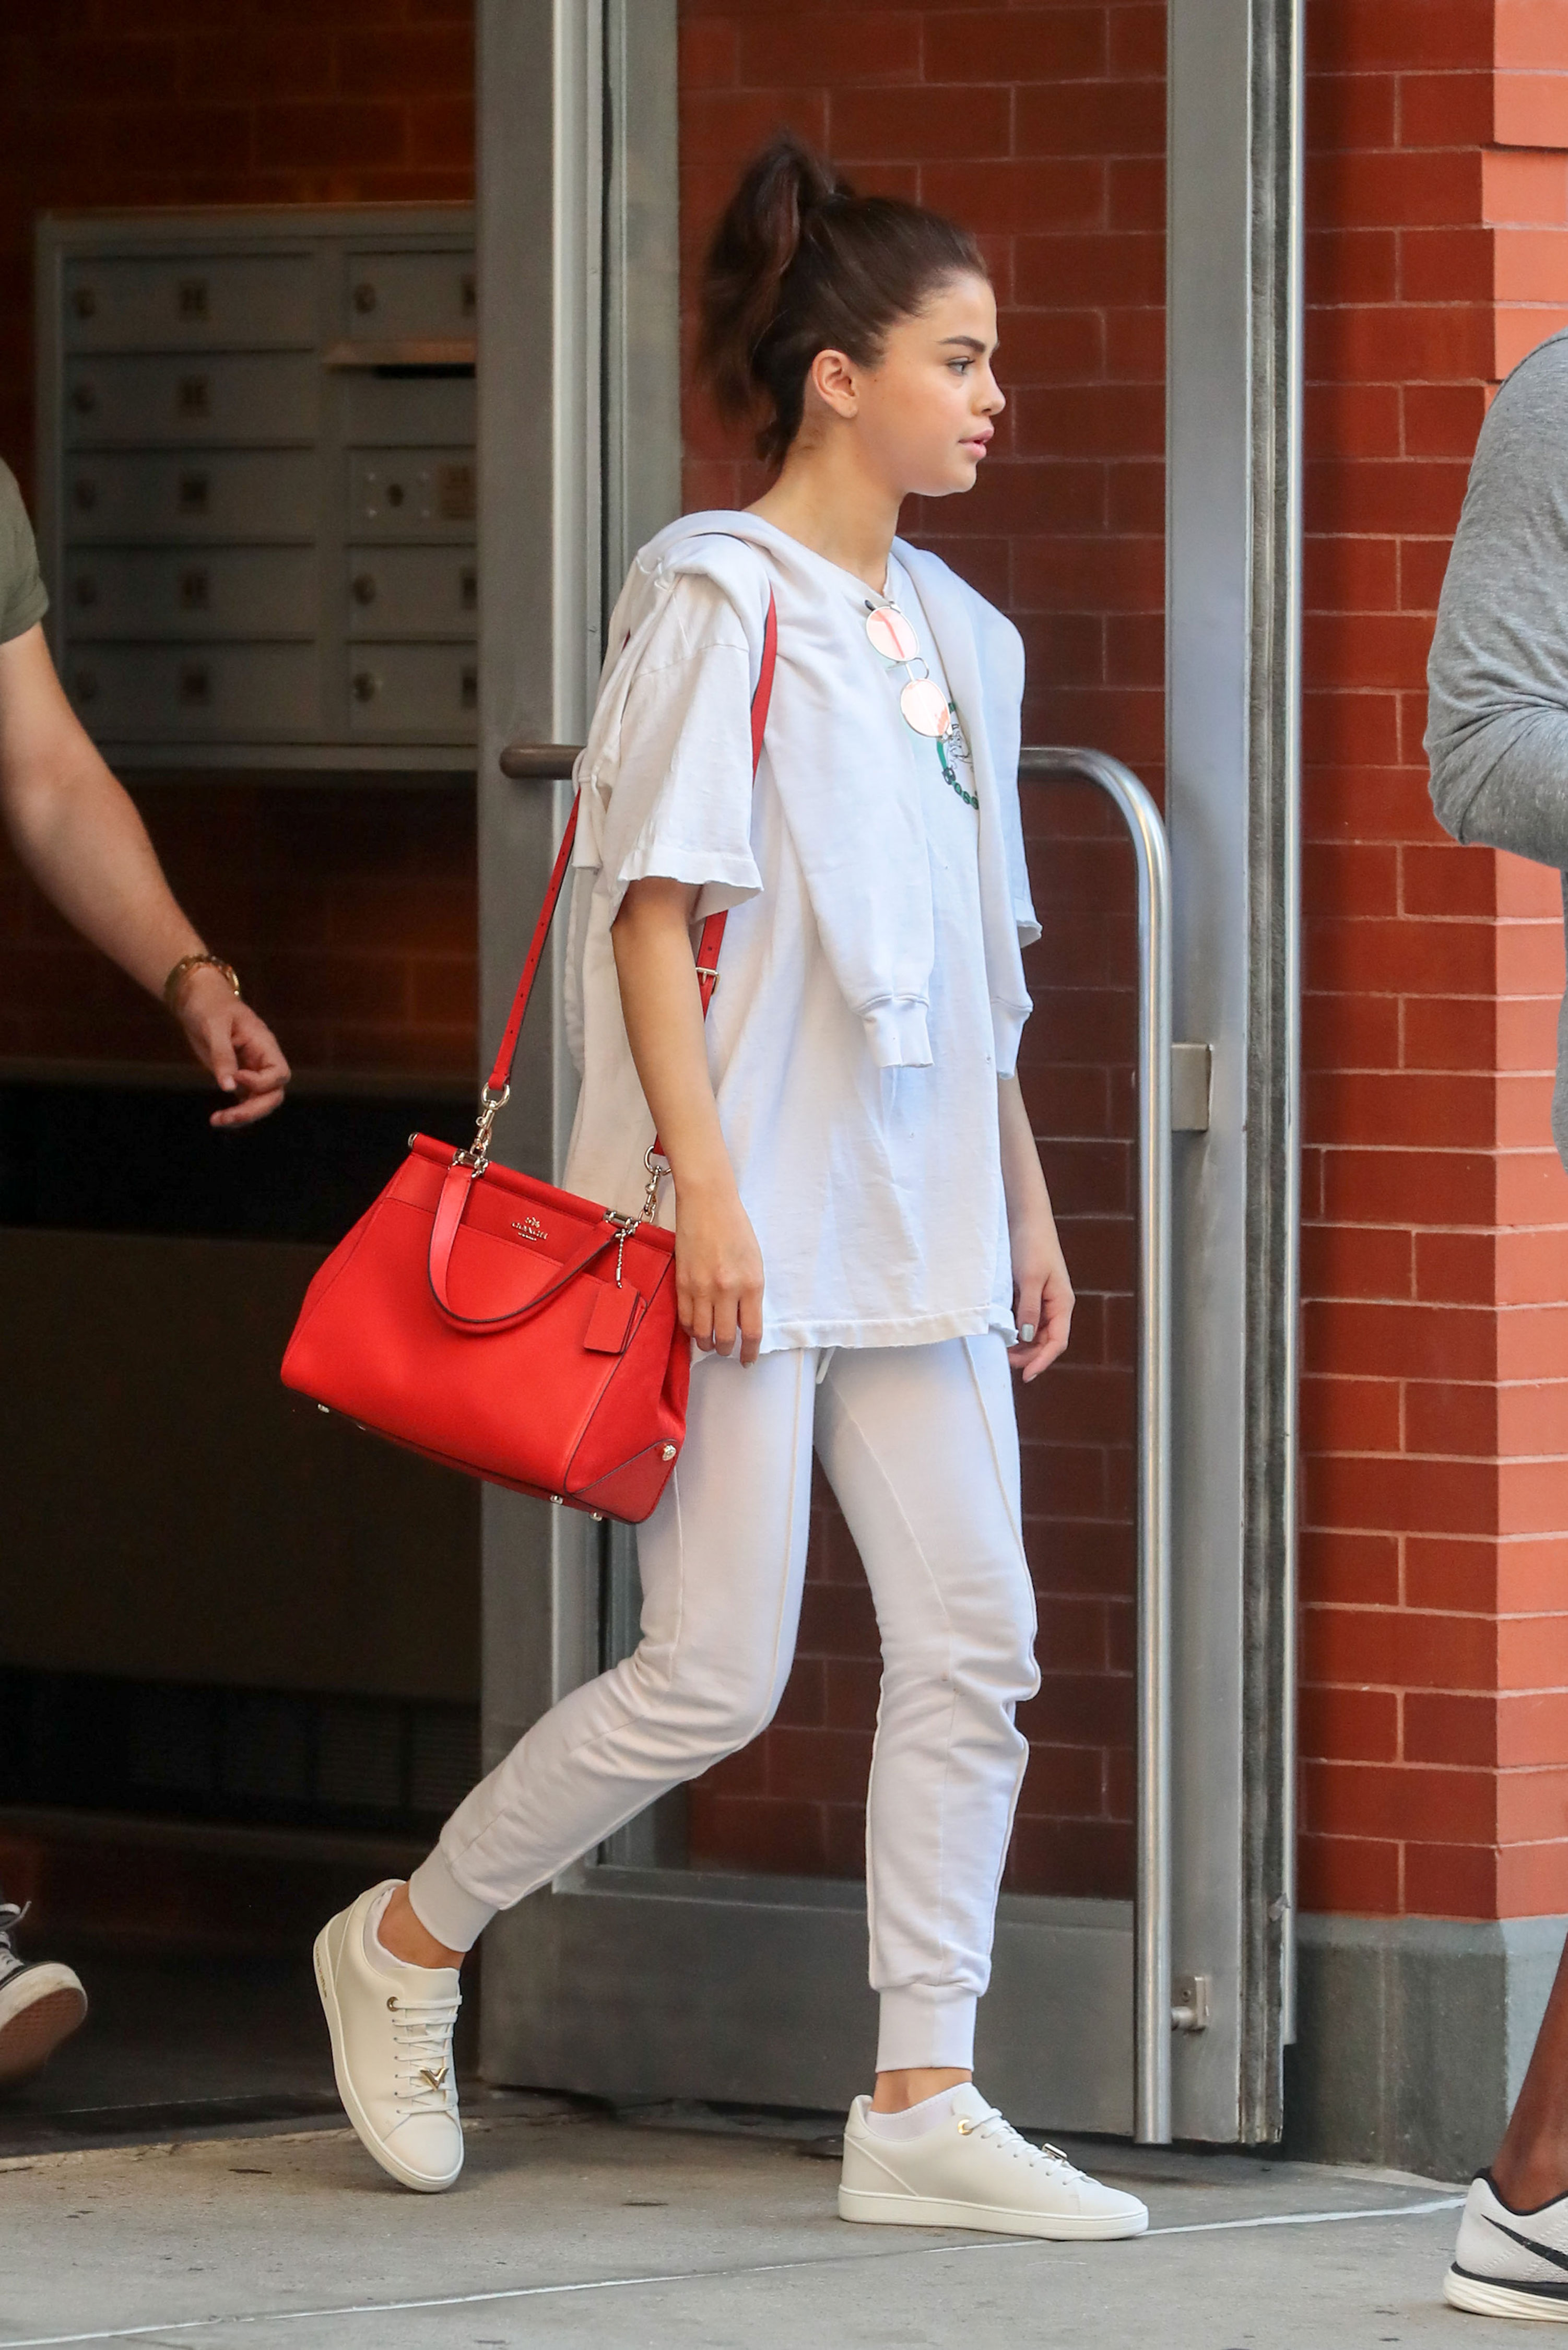 You can finally buy the bag Selena's been carrying everywhere - Grazia